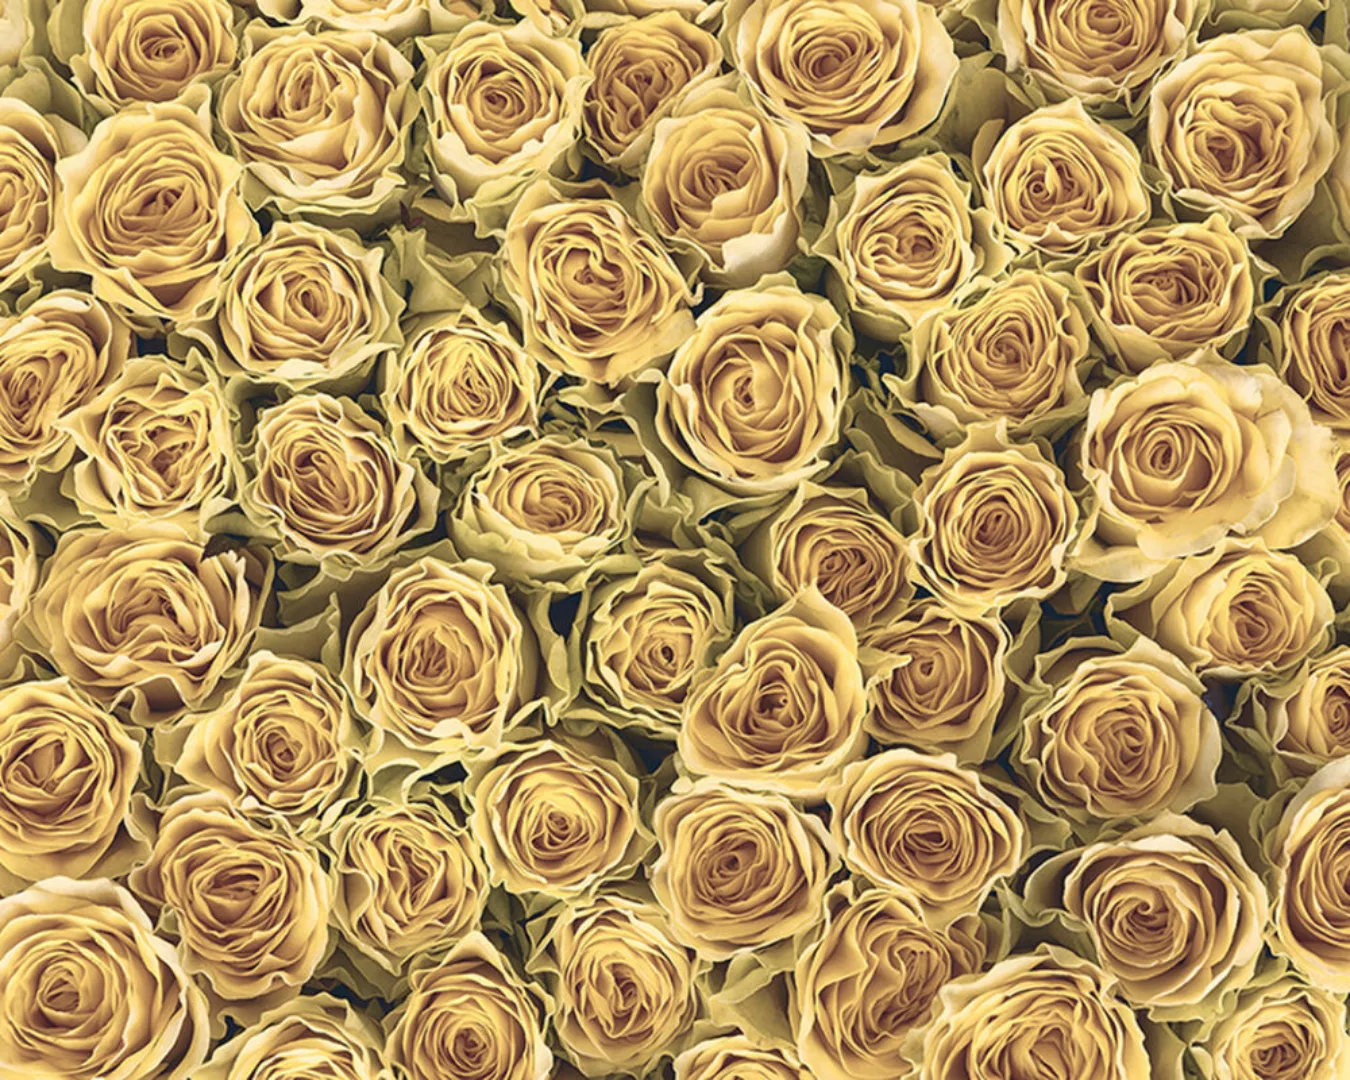 Fototapete "Golden Roses" 4,00x2,67 m / Strukturvlies Klassik günstig online kaufen